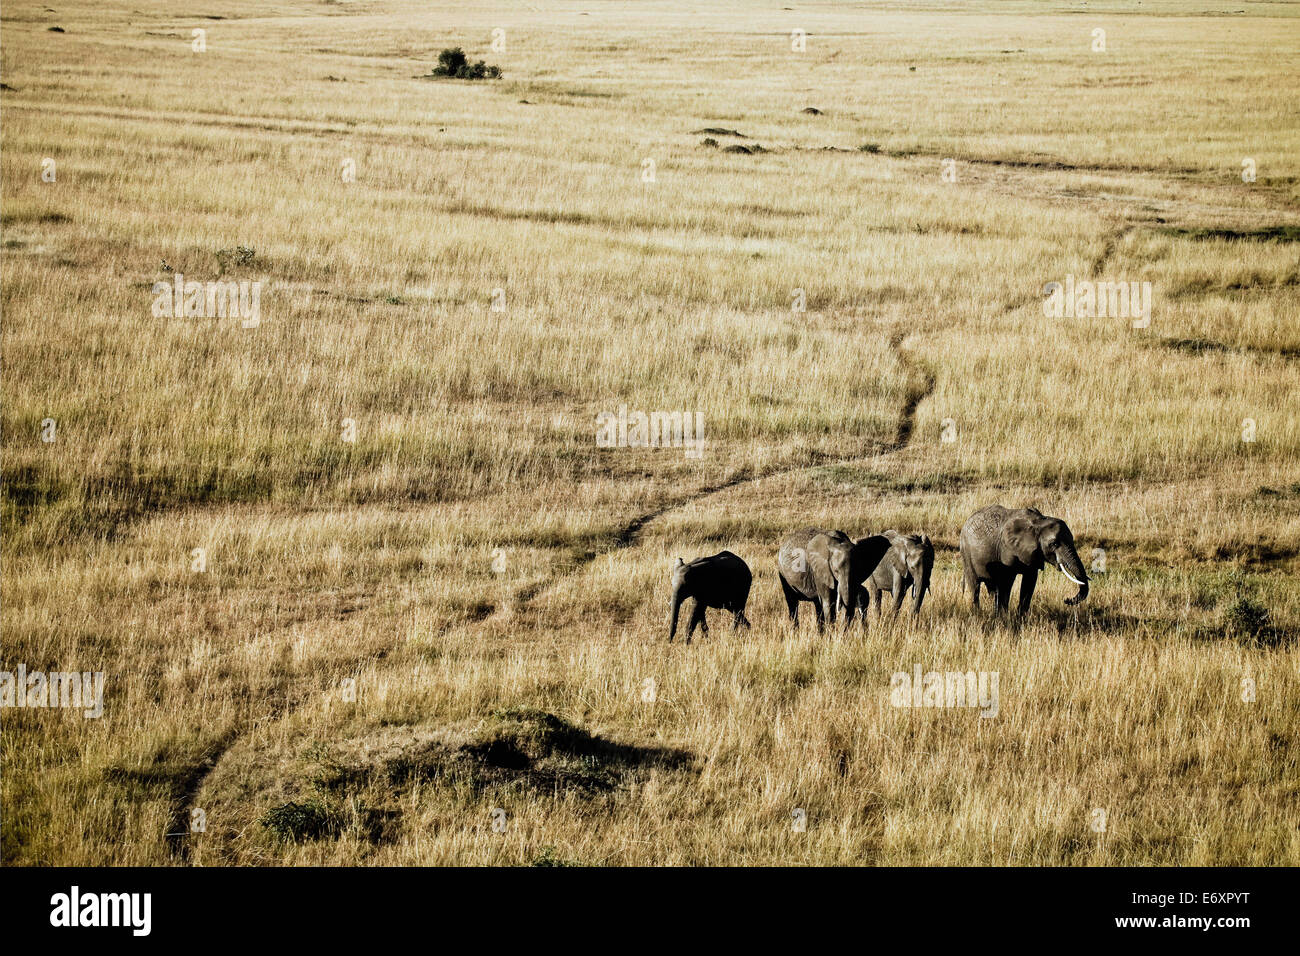 A group of elephants in the Masai Mara, Kenya, Africa Stock Photo